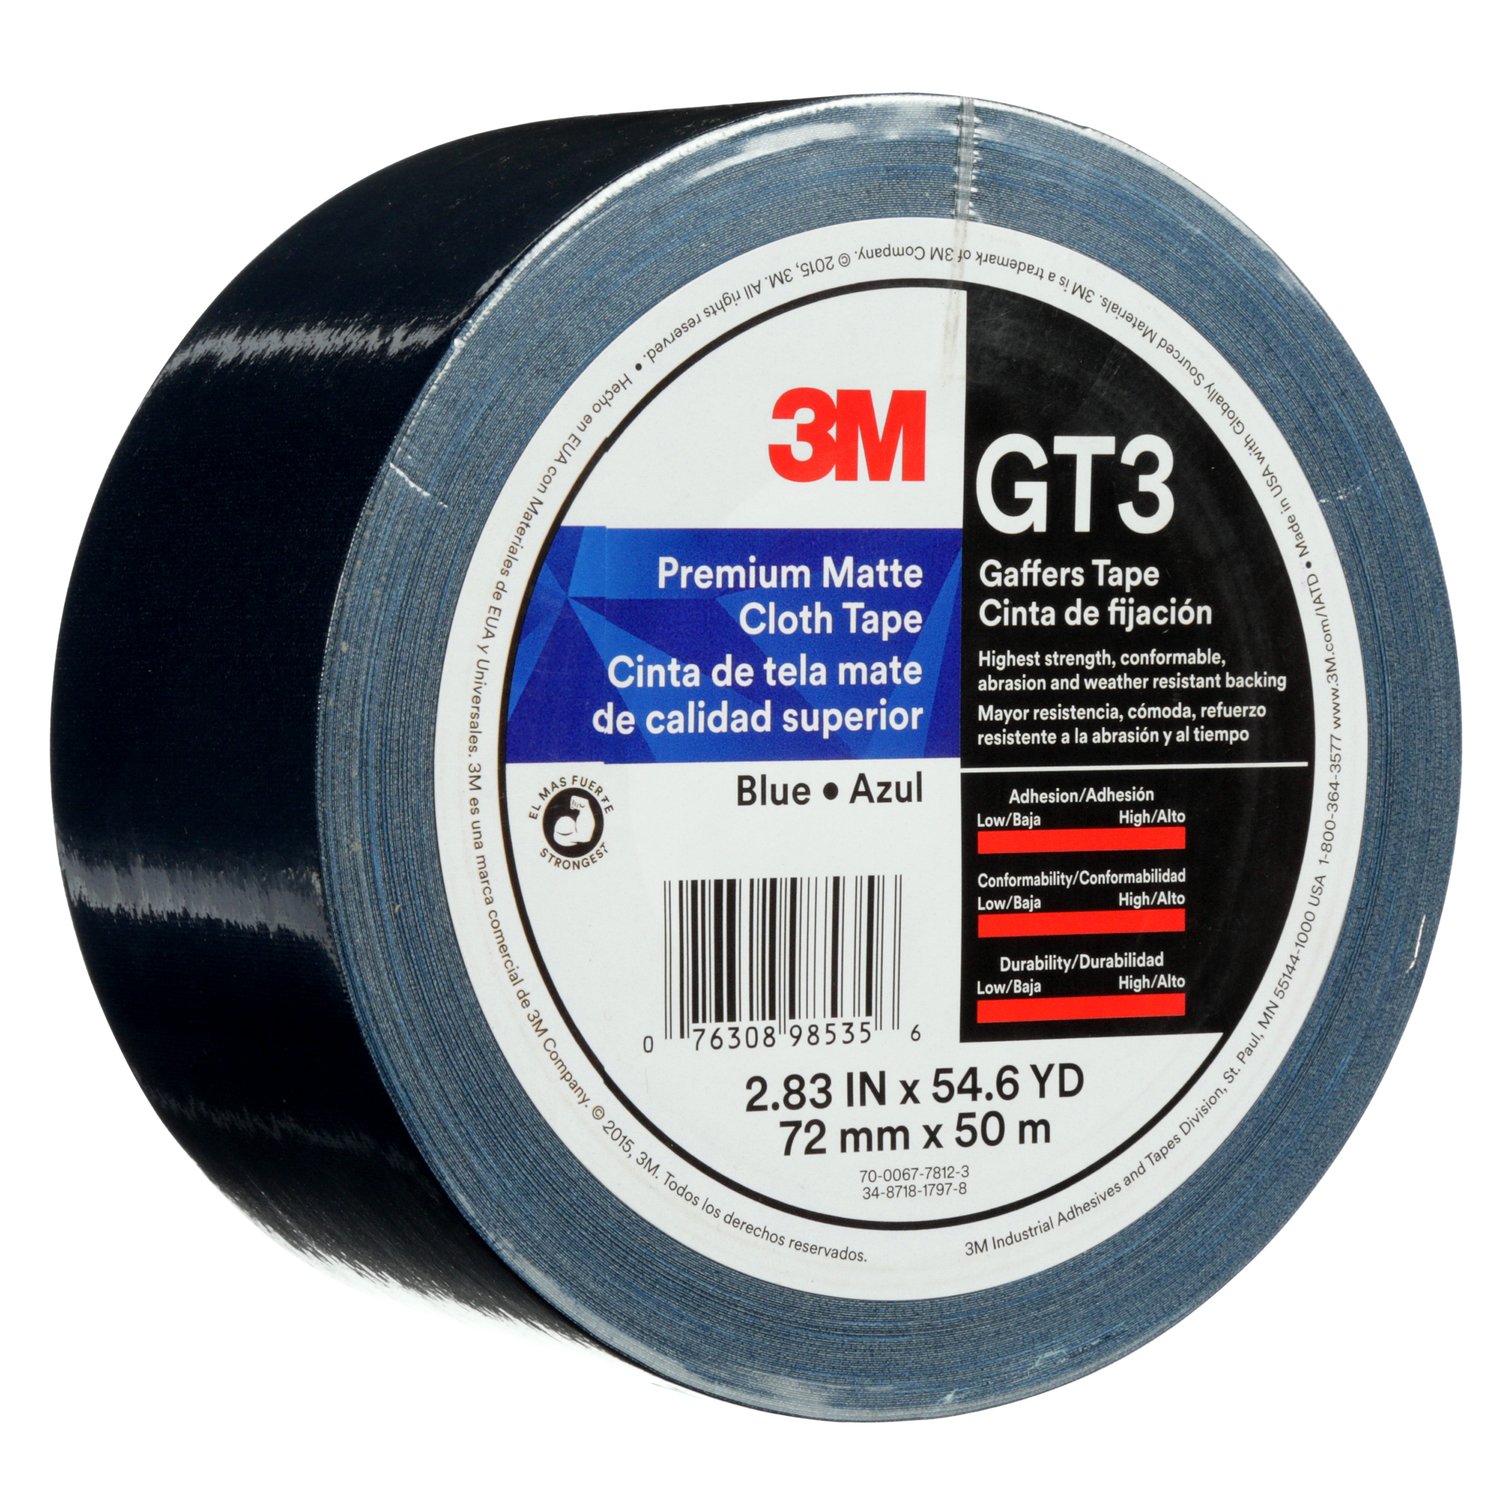 7010375523 - 3M Premium Matte Cloth (Gaffers) Tape GT3, Blue, 72 mm x 50 m, 11 mil,
16/Case